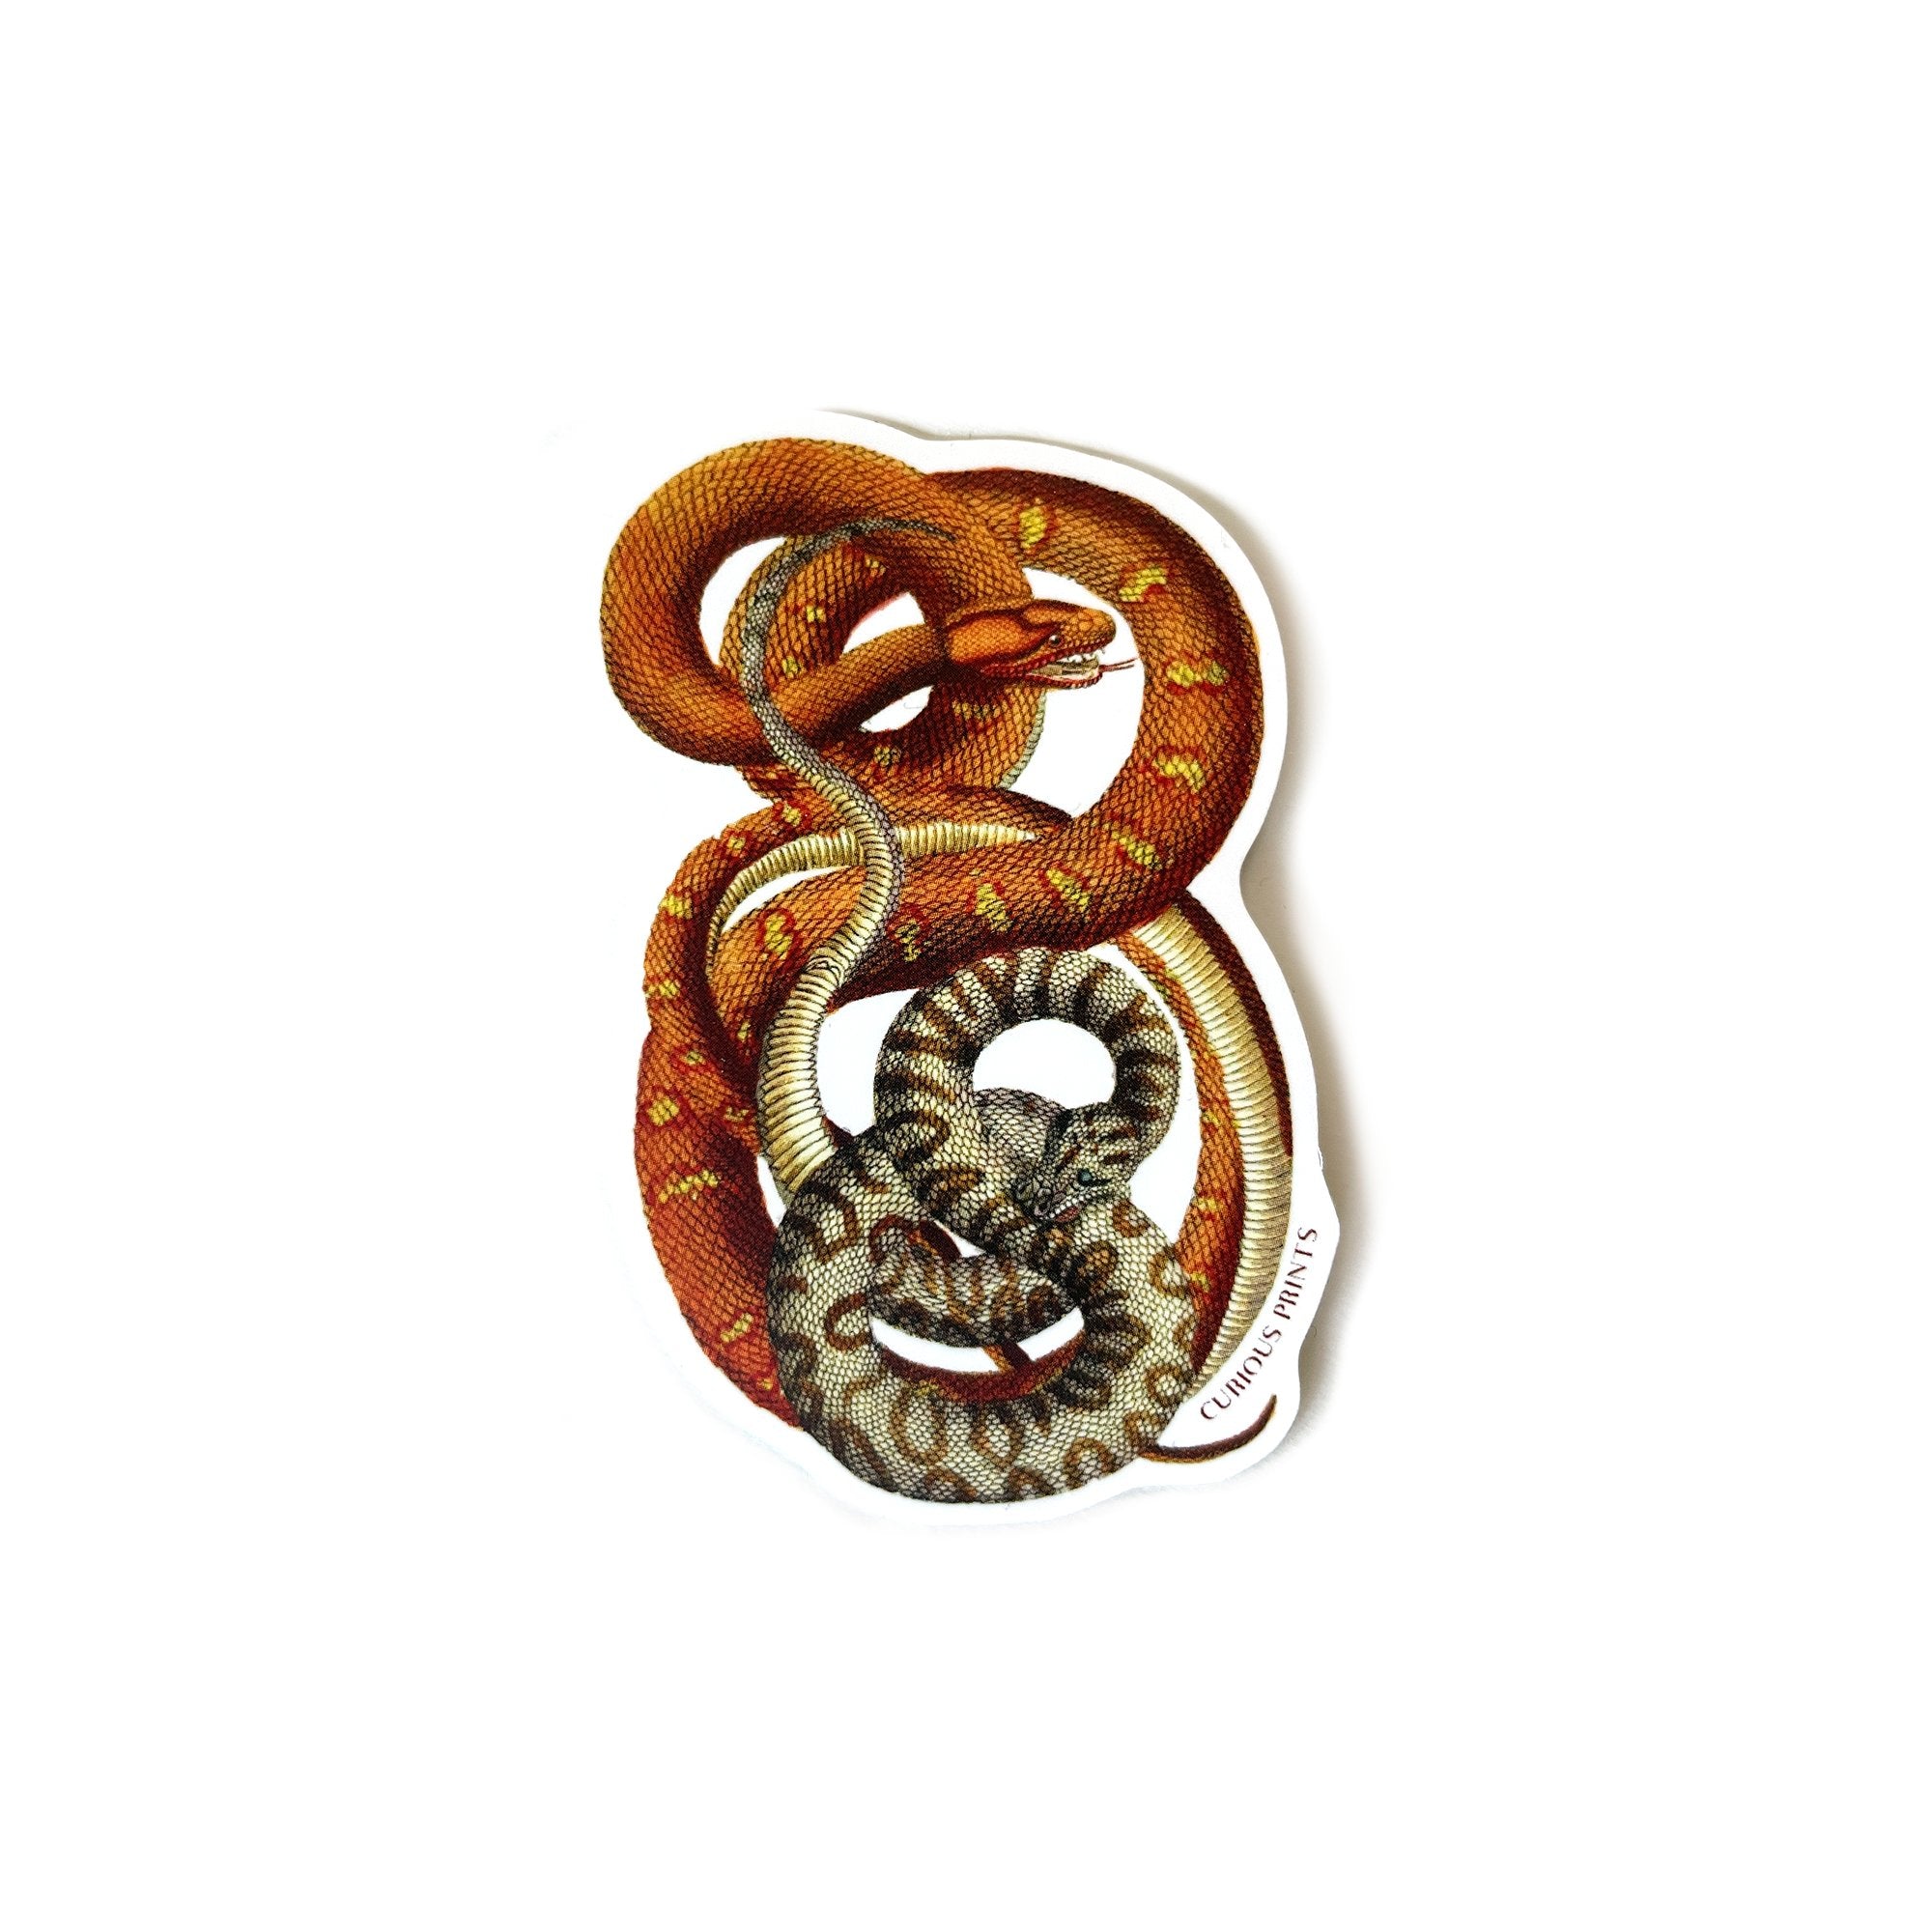 Vintage Snakes Waterproof Sticker - Spiral Circle